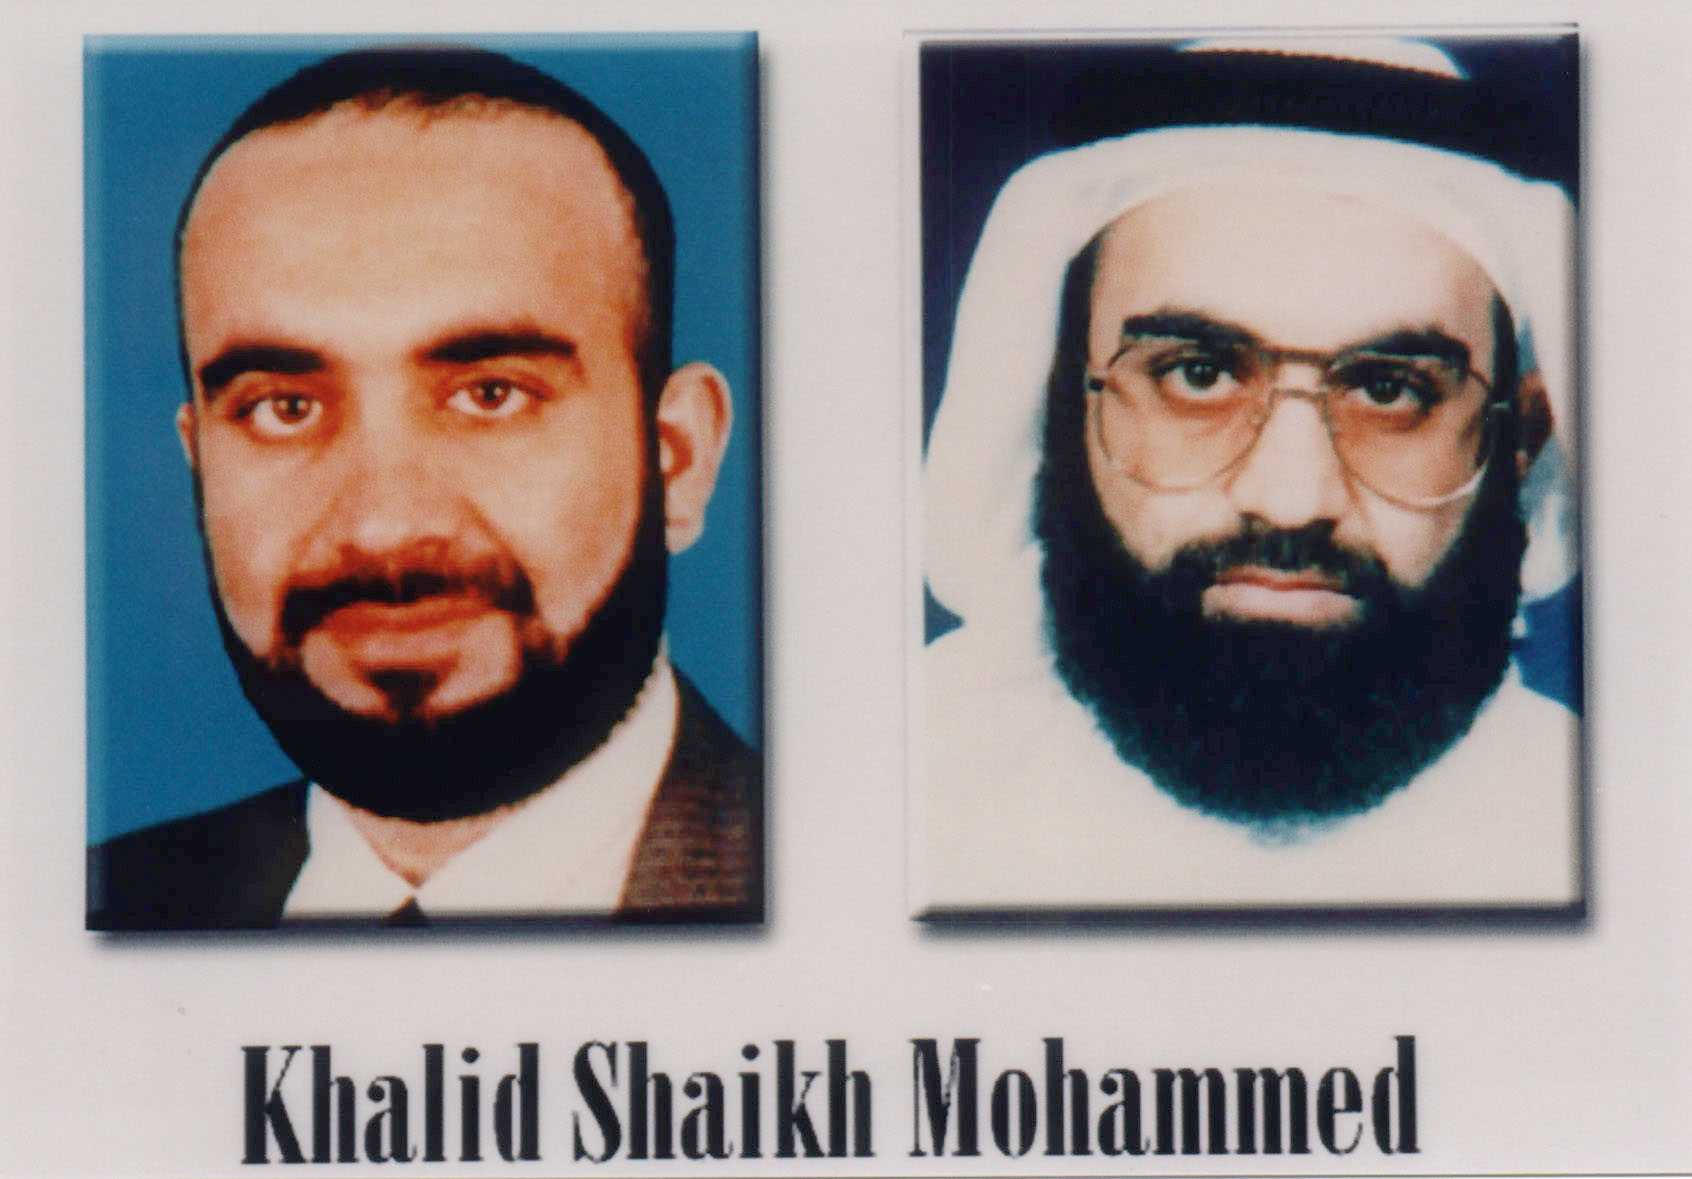 KSM Khalid Sheikh Mohammed 9/11 terrorism 